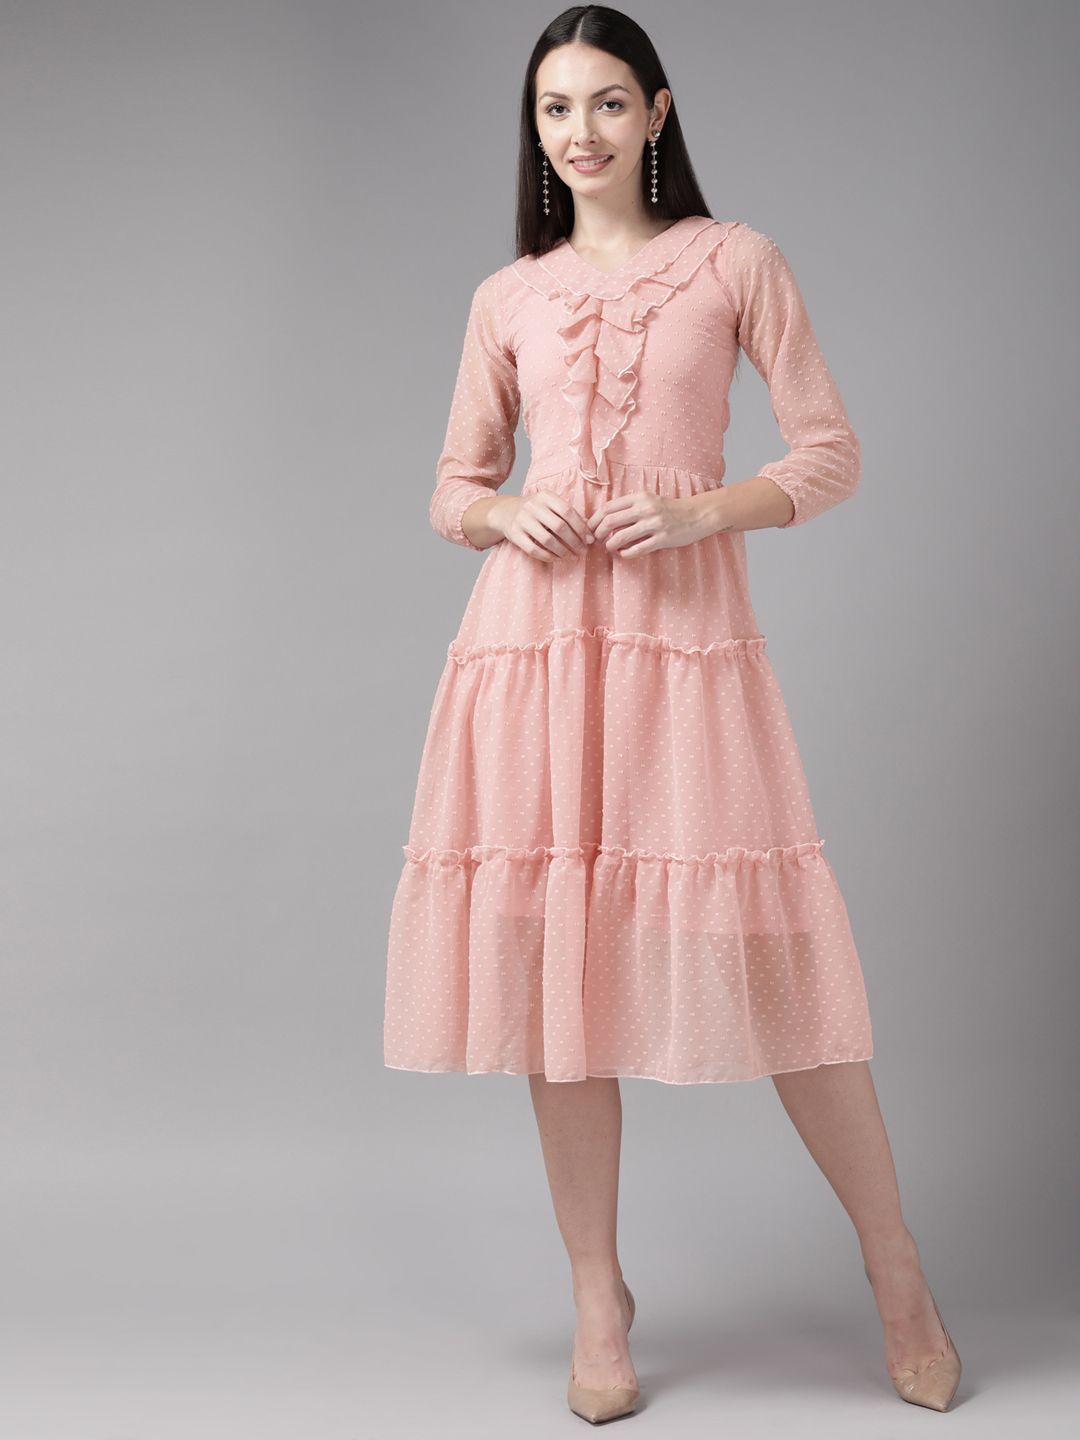 aarika peach-coloured georgette a-line dress